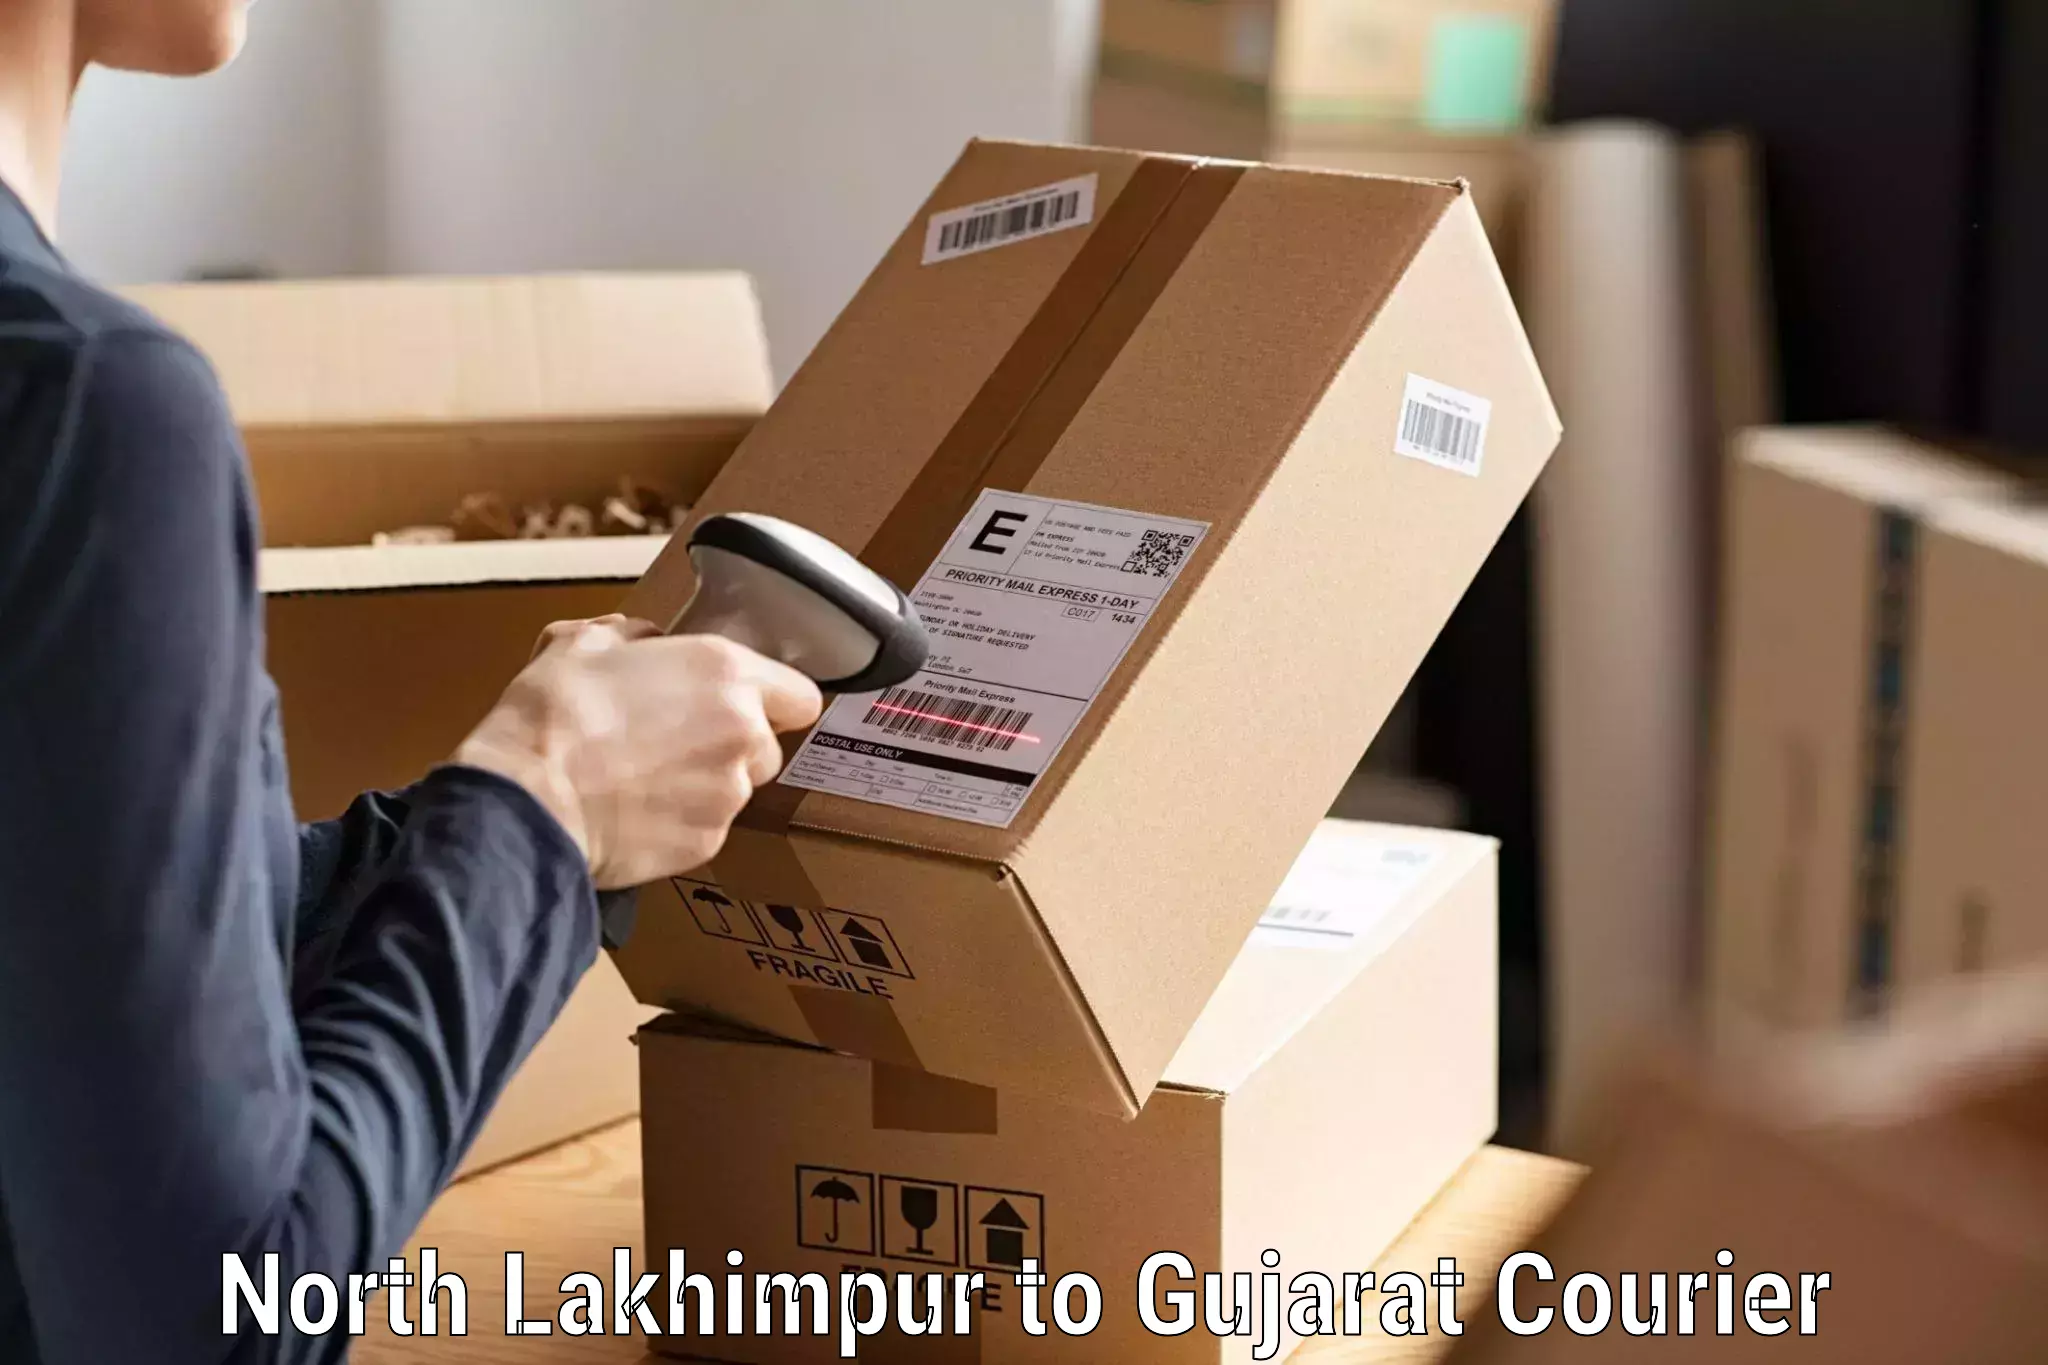 Professional parcel services North Lakhimpur to Ankleshwar